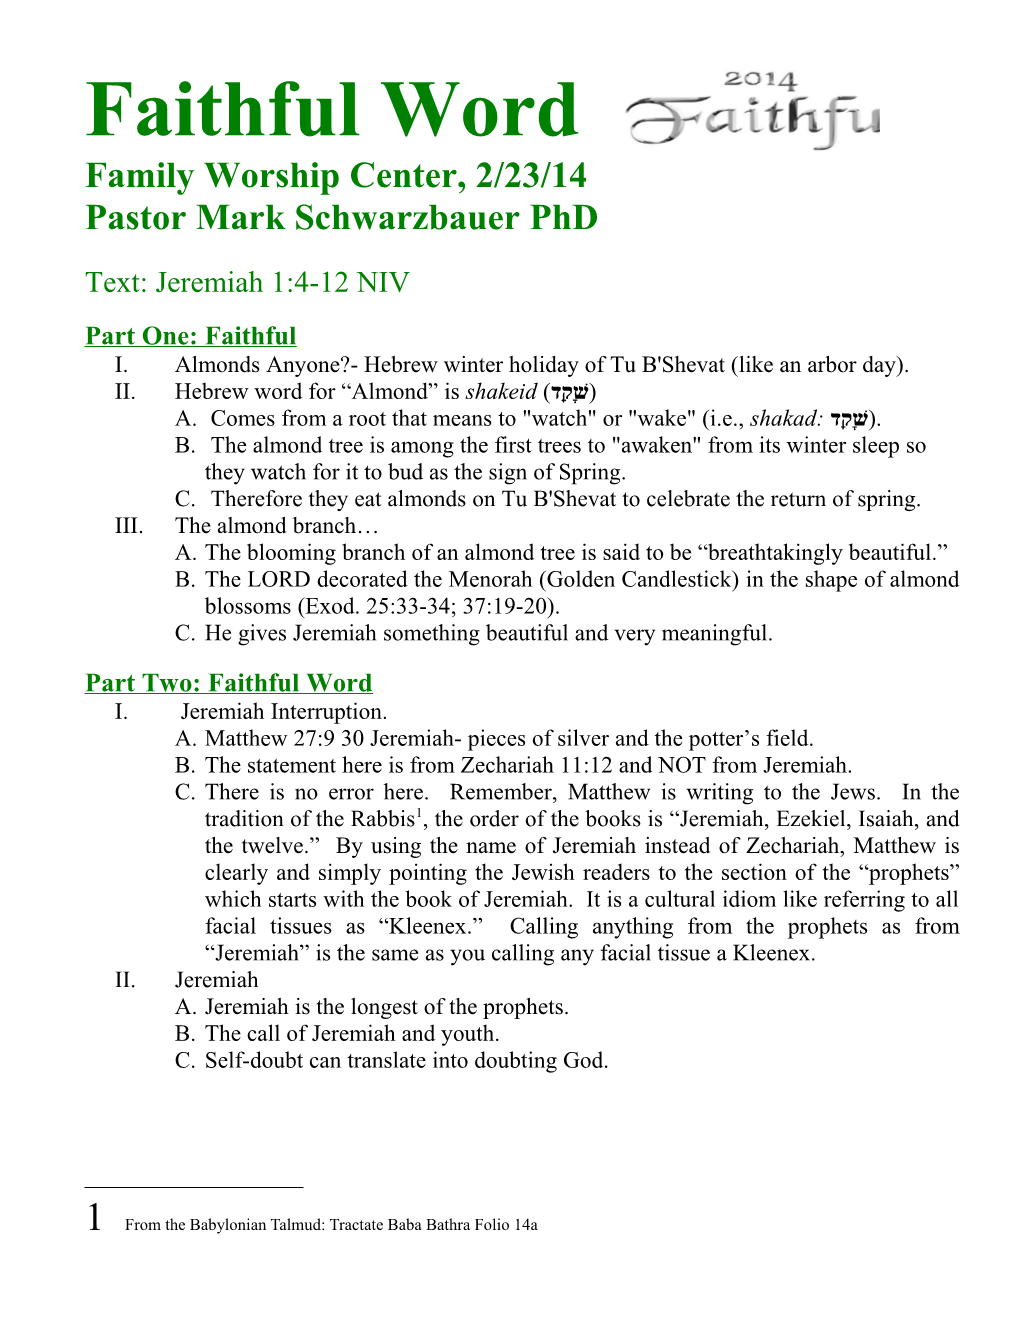 Family Worship Center, 2/23/14 Pastor Mark Schwarzbauer Phd